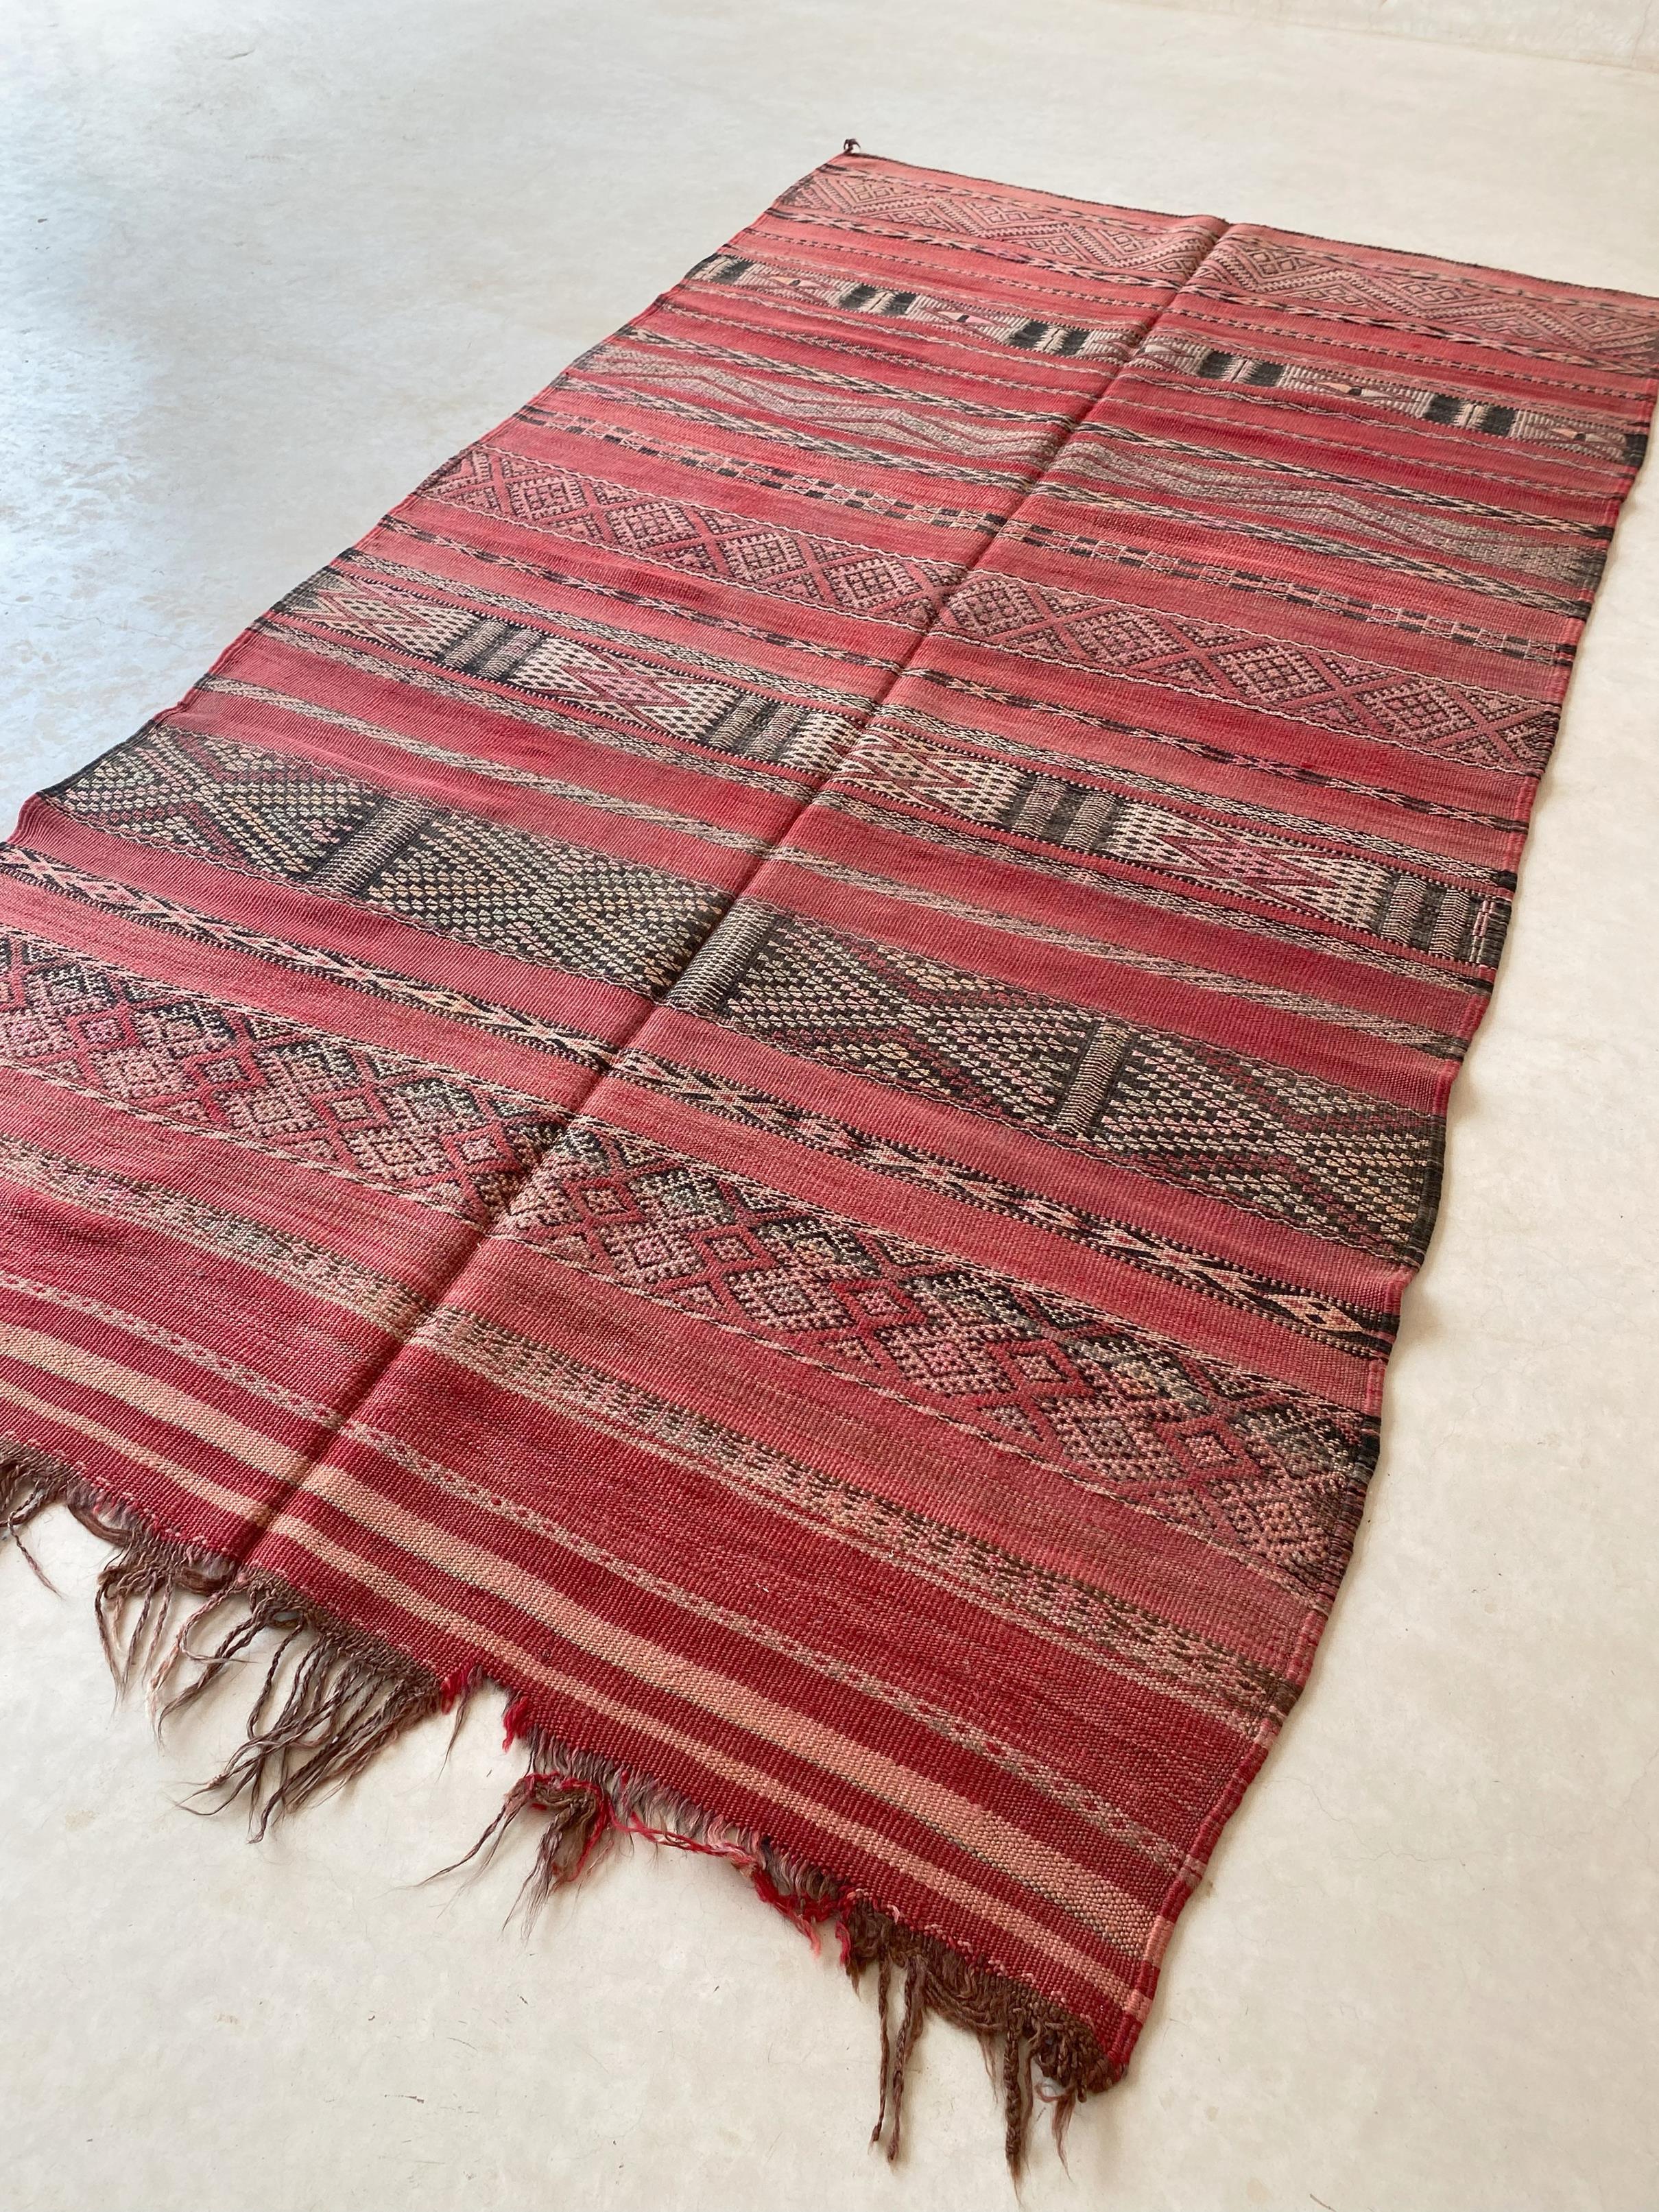 Tribal Vintage Moroccan Kilim rug - Red - 5x9.2feet / 152x282cm For Sale